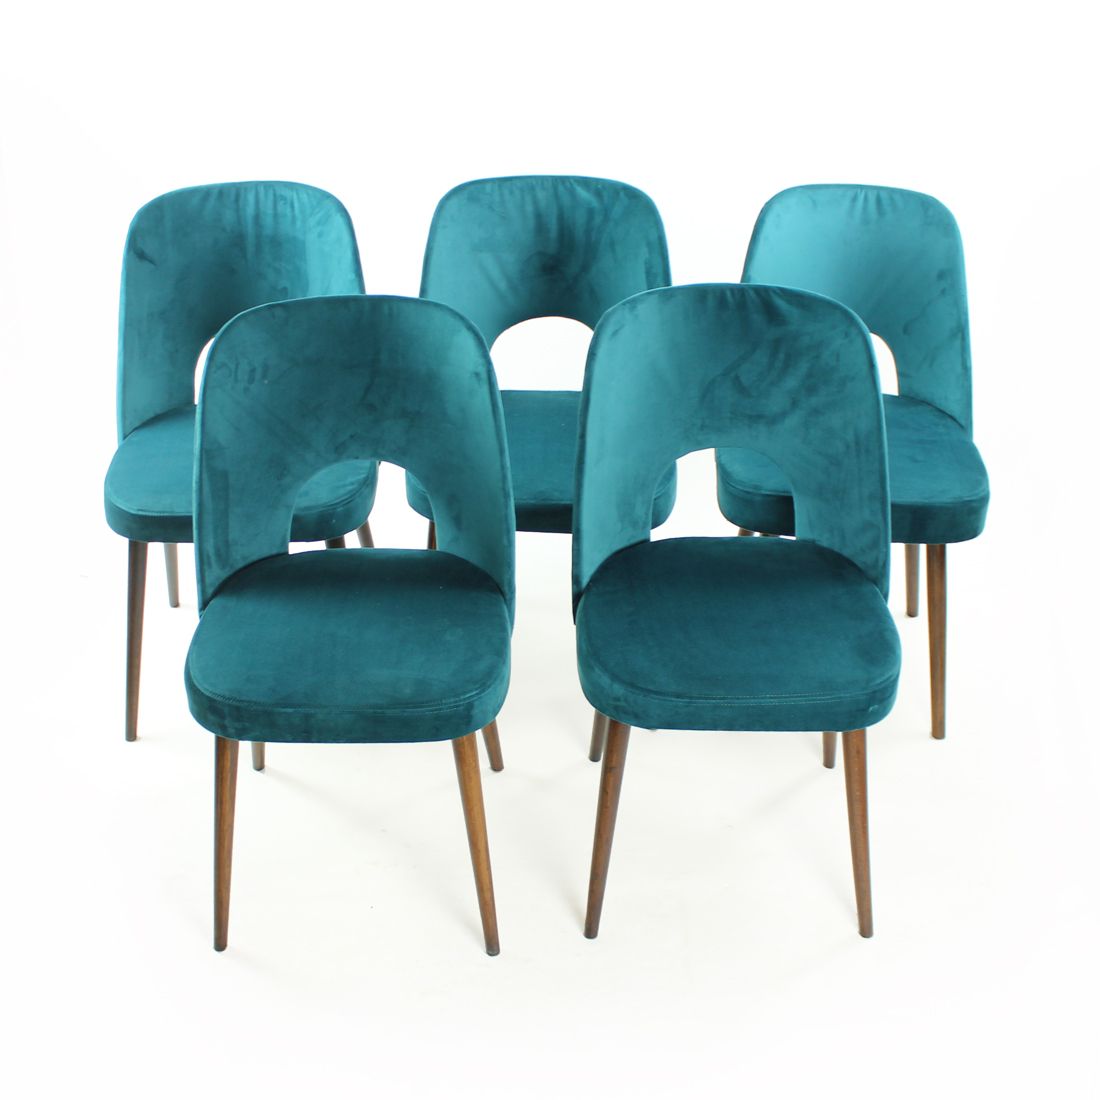 Set of COLISÉE chairs